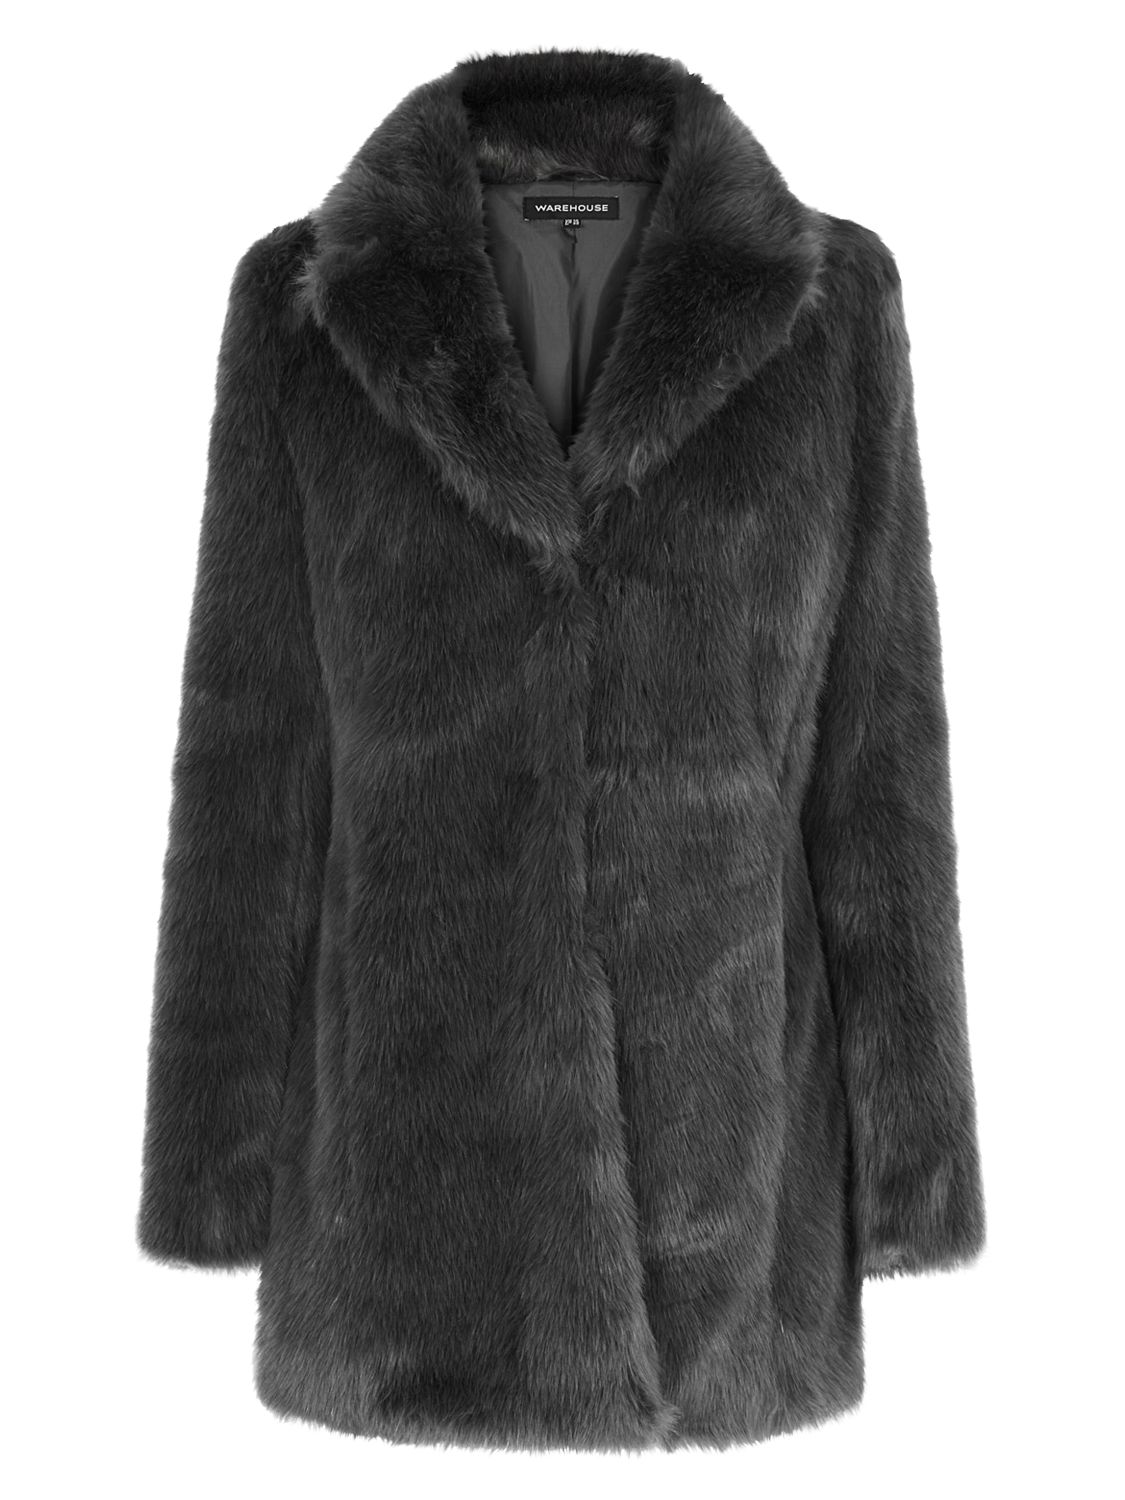 Warehouse Luxe Faux Fur Coat, Light Grey